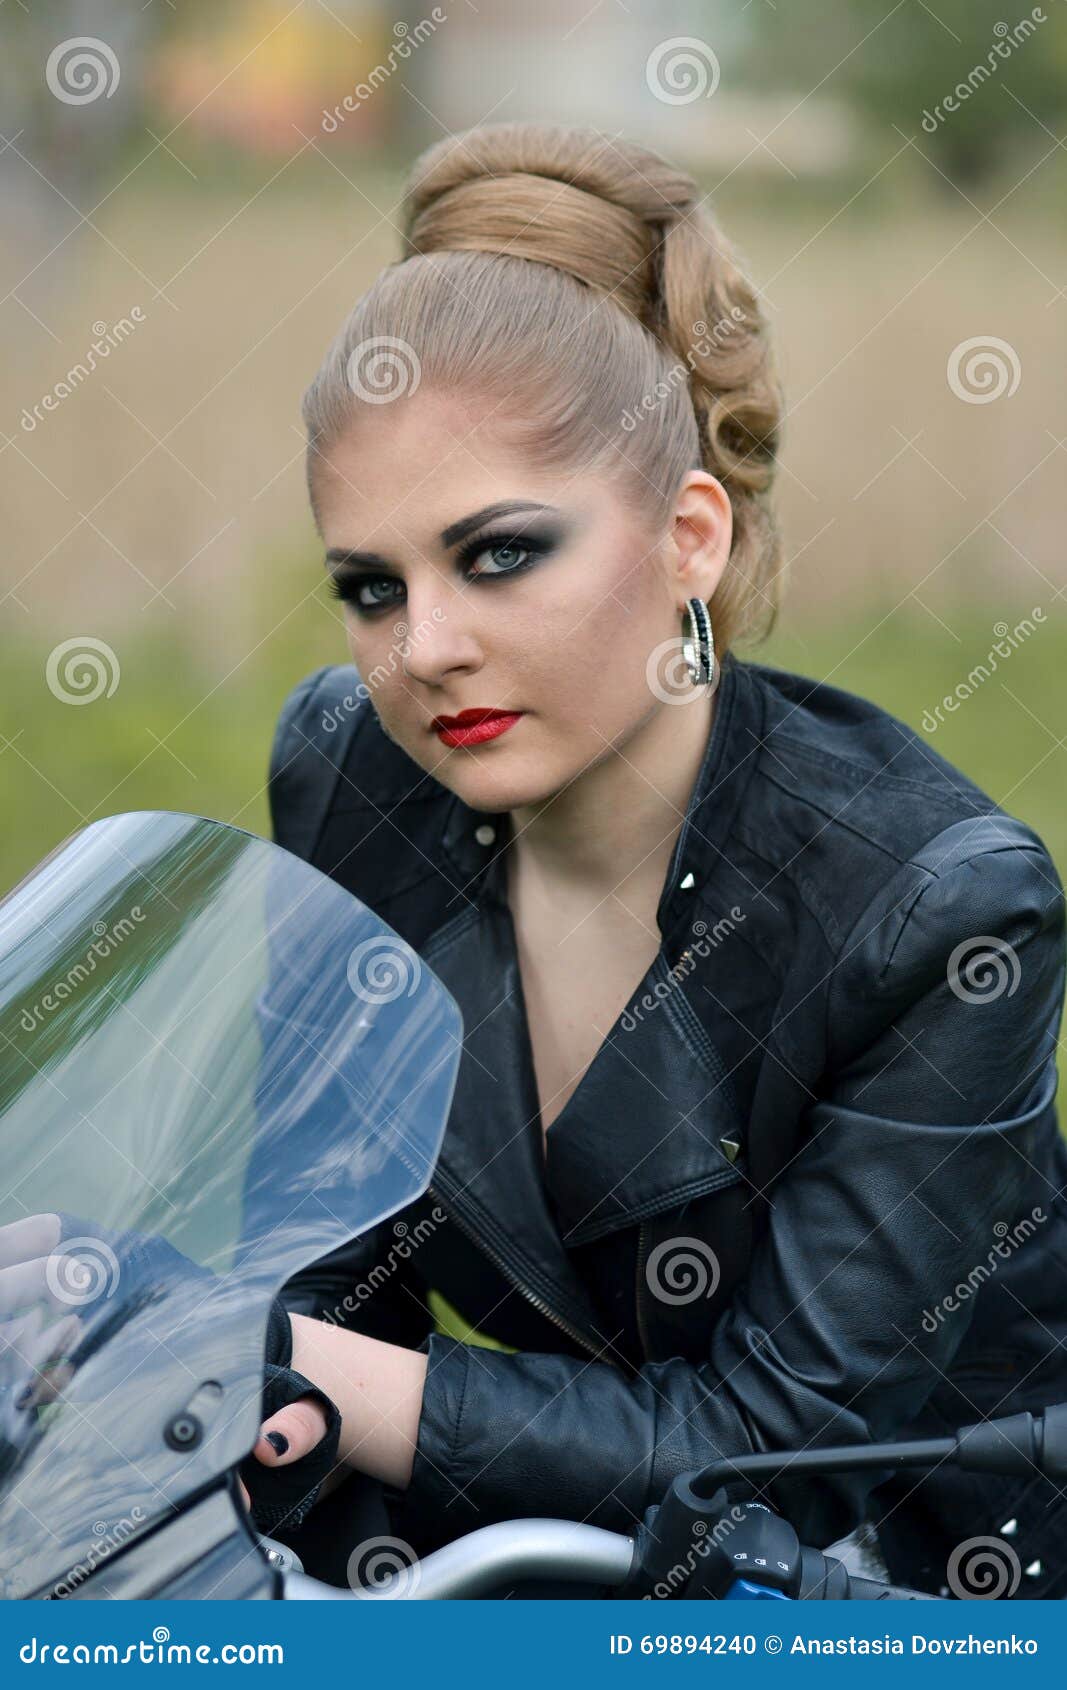 Stunning,fashionable,dangerous,angry,serious Biker Girl with Smokey ...